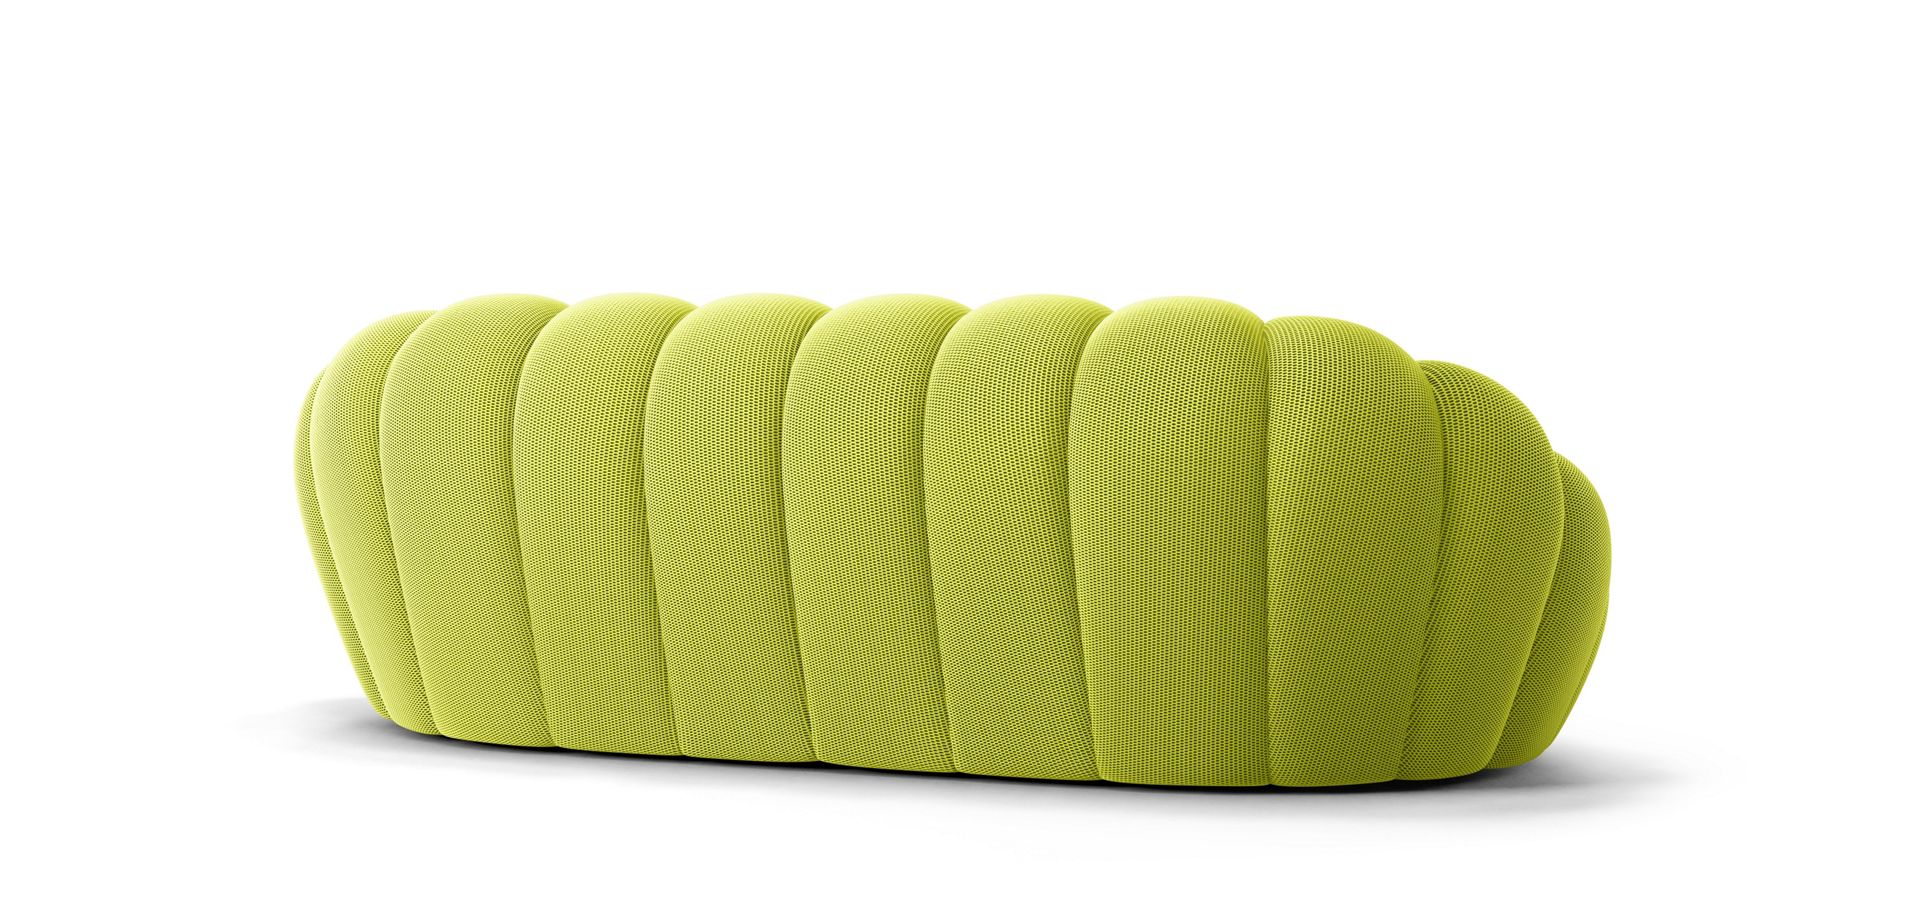 gran sofá 3 plazas - techno 3D image number 12